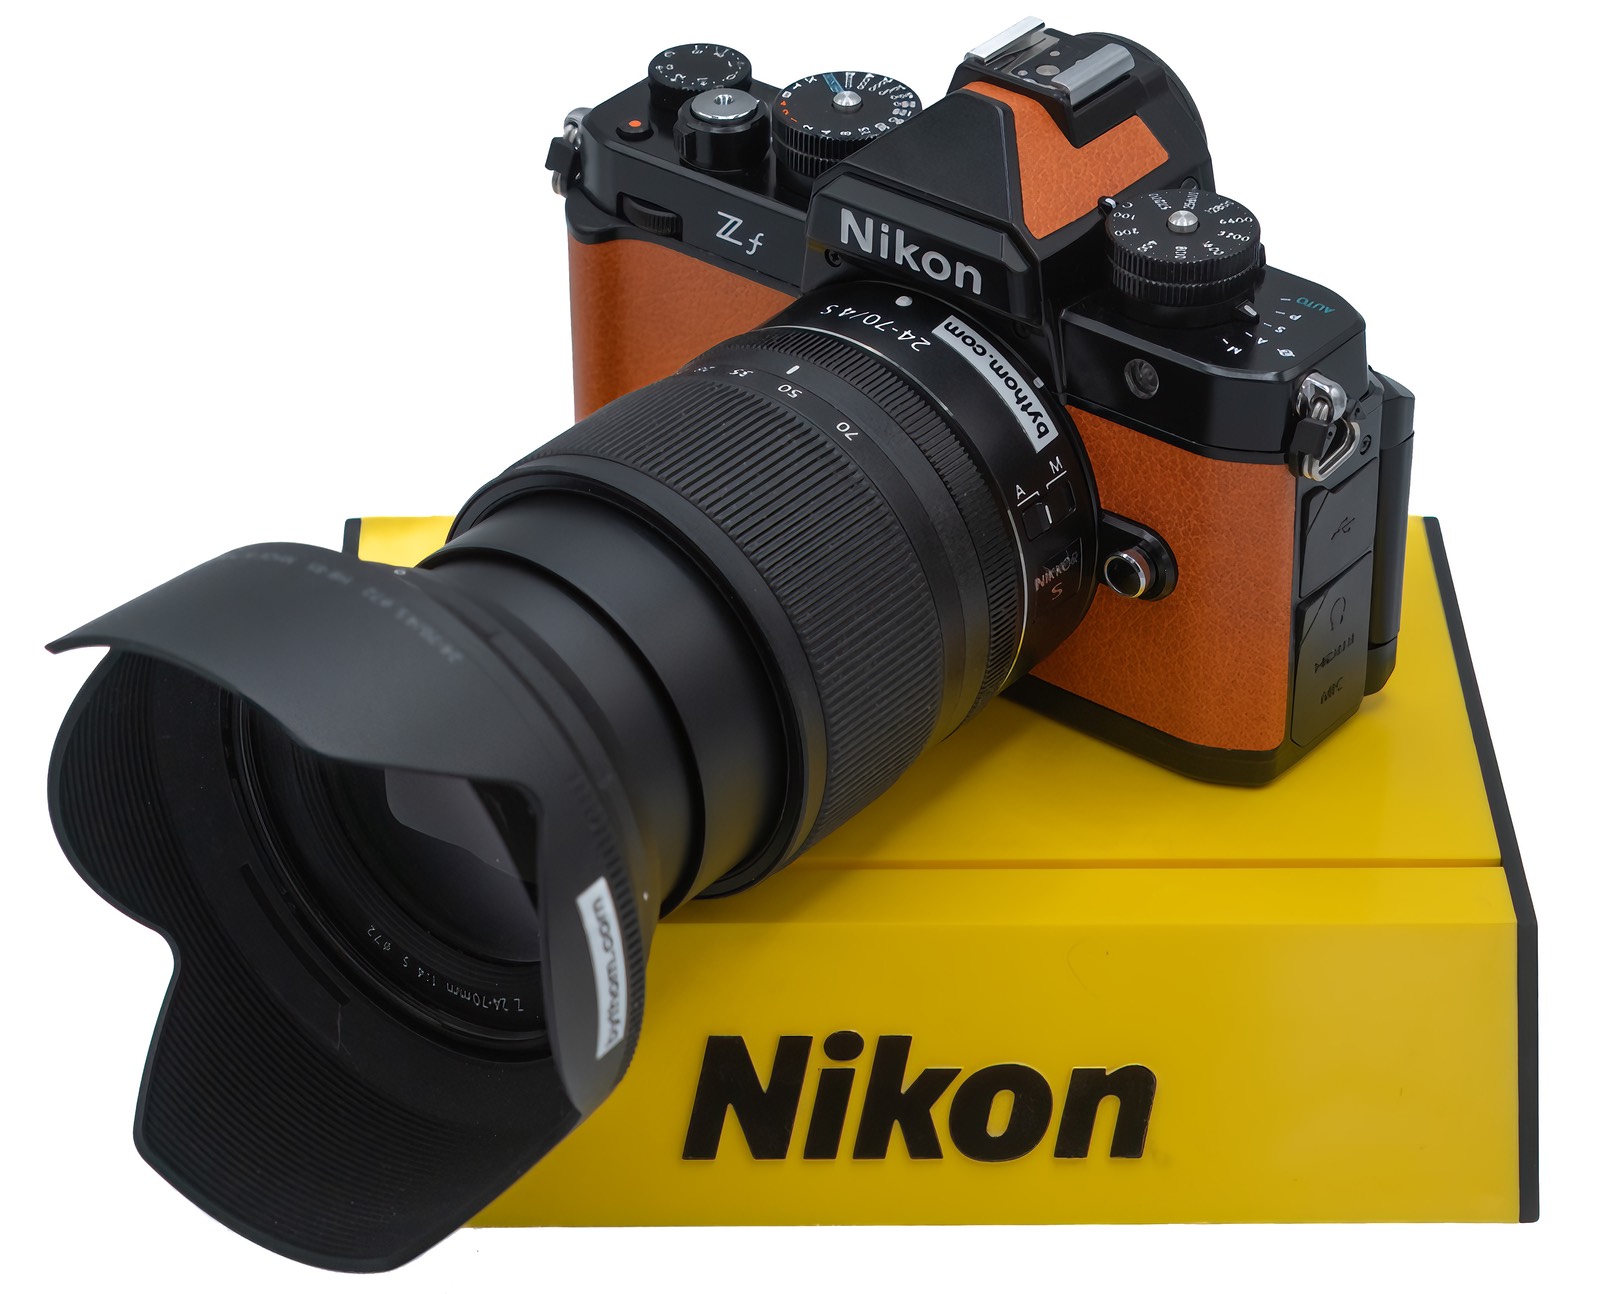 Nikon Zf Camera Review